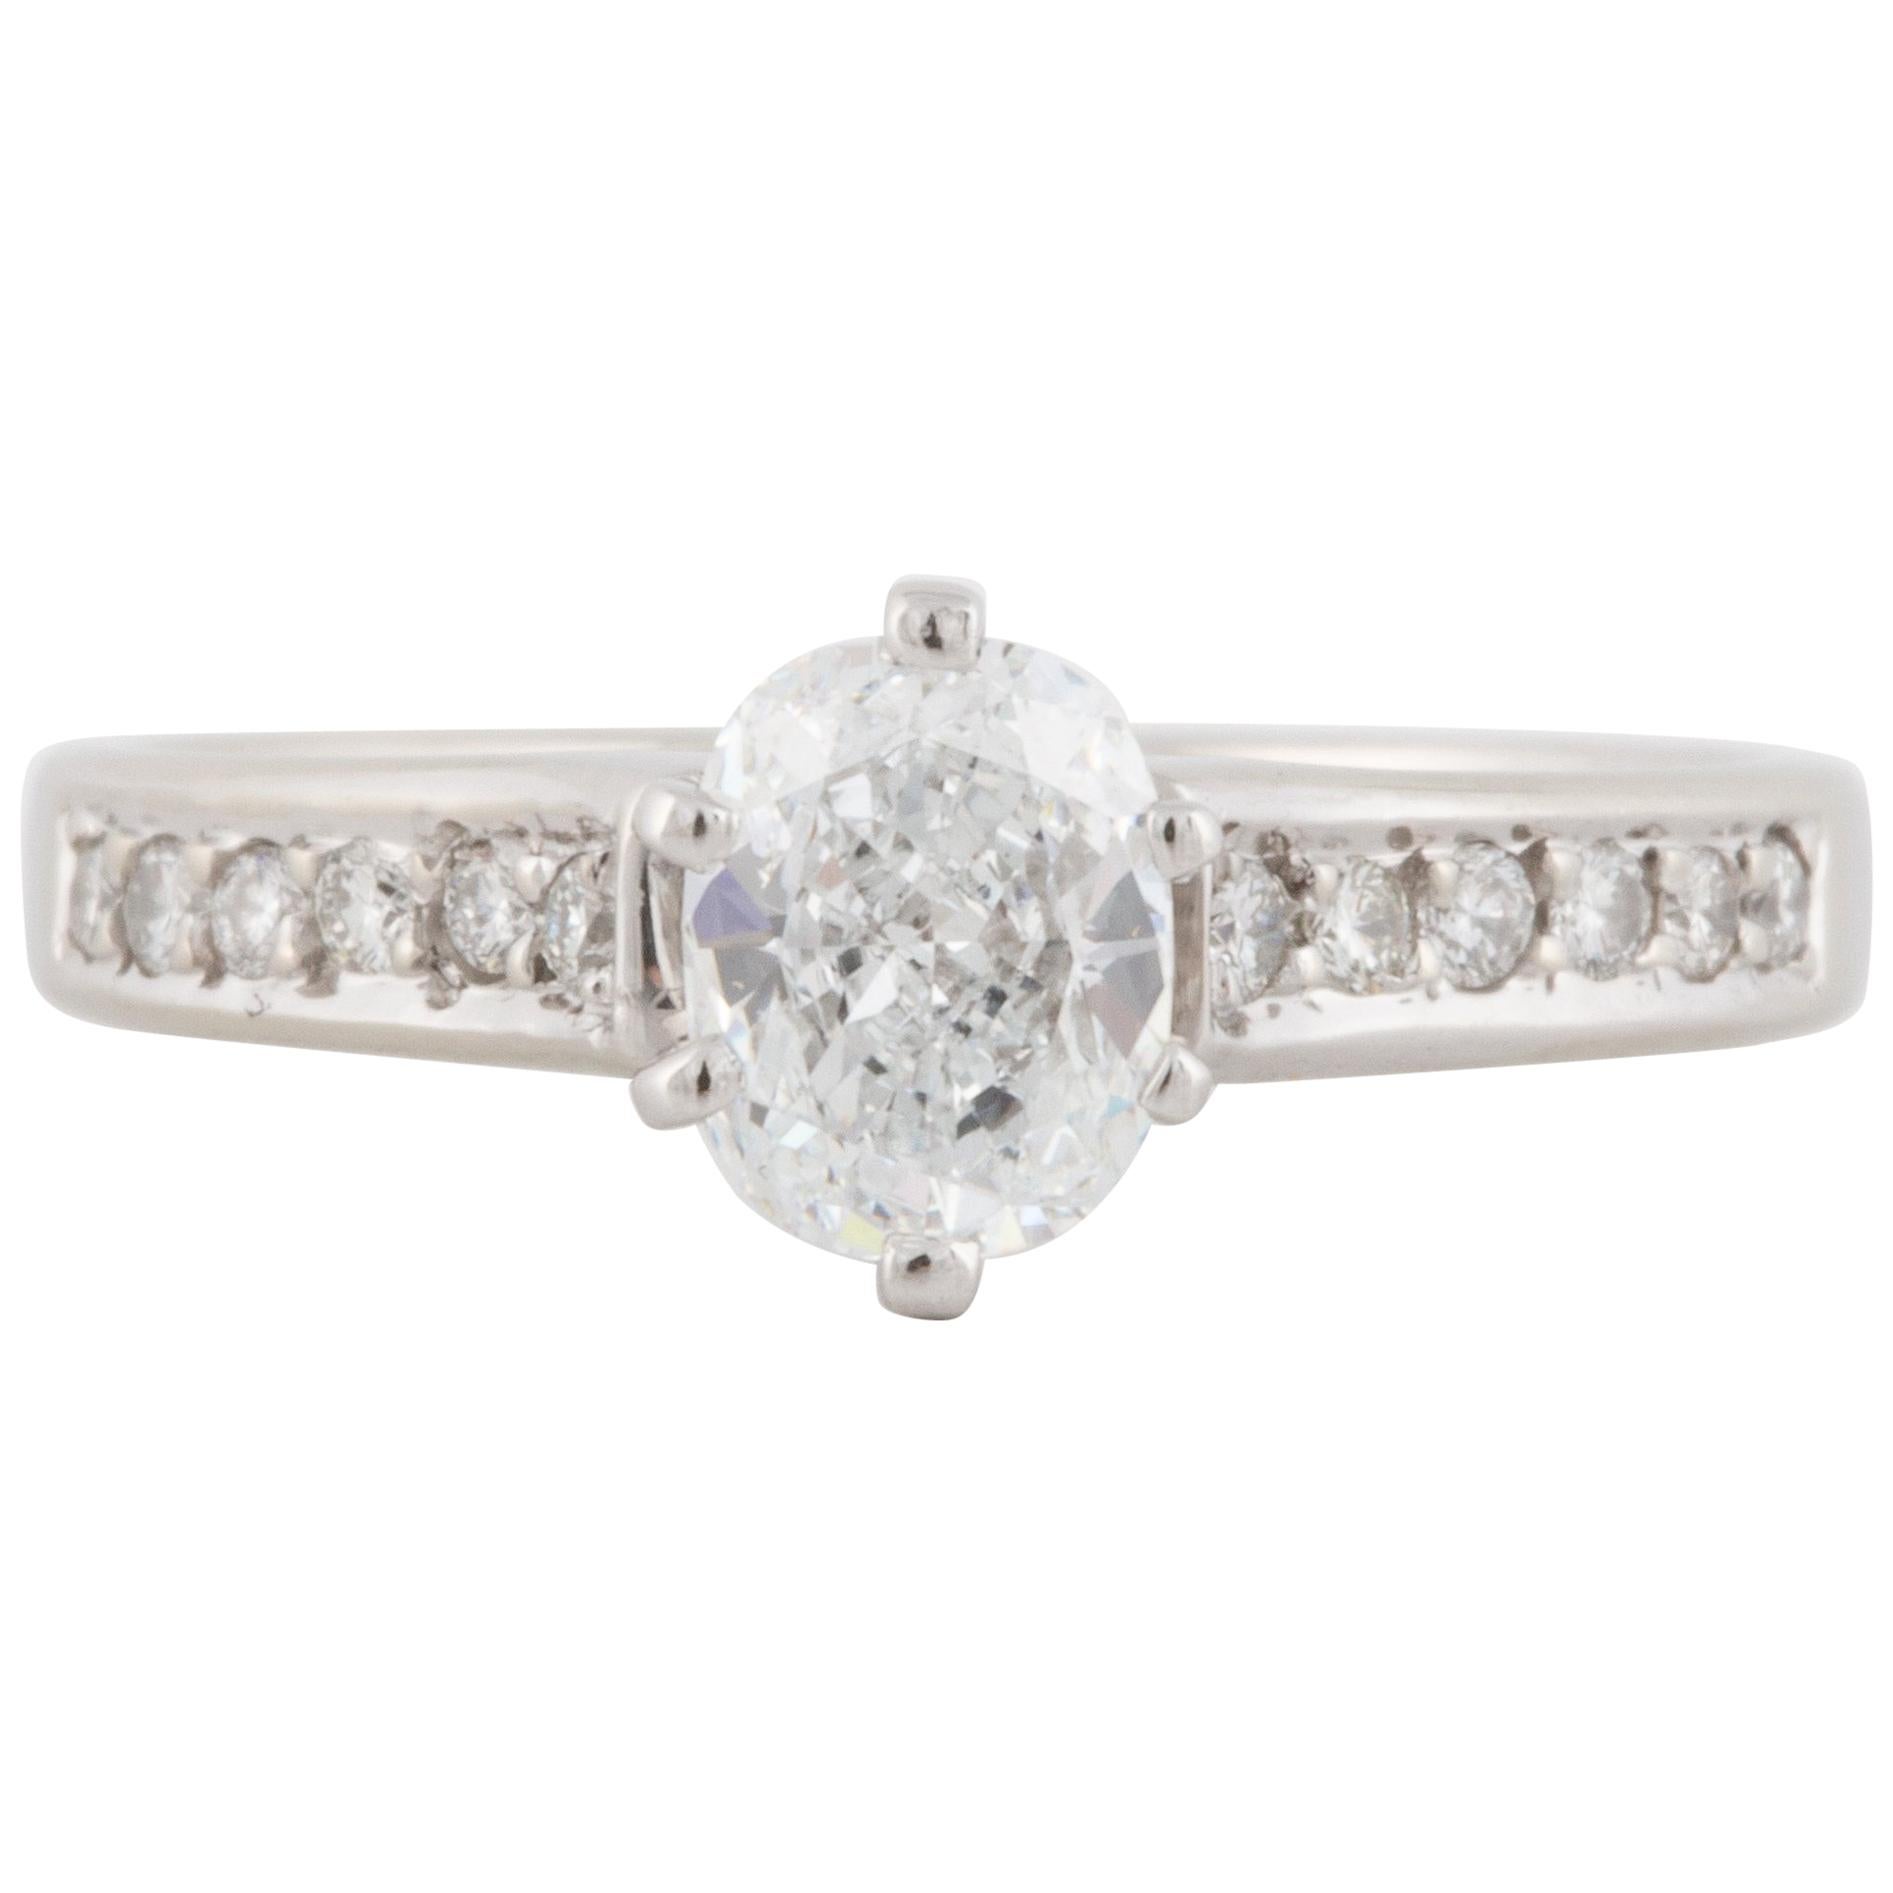 GIA Certified Cushion Cut Diamond Engagement Ring in 18K White Gold